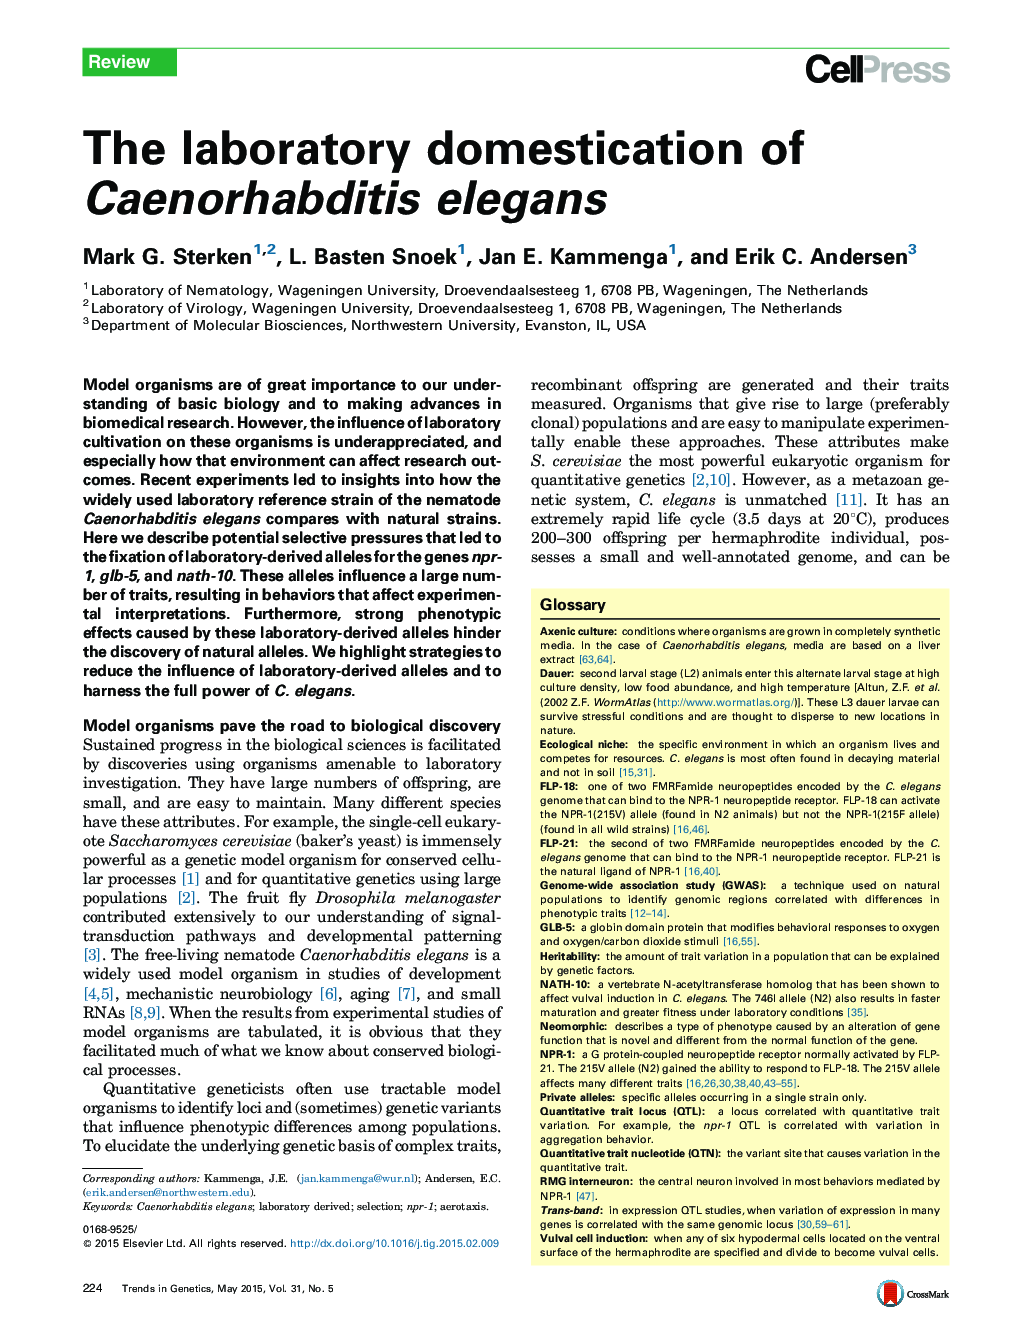 The laboratory domestication of Caenorhabditis elegans